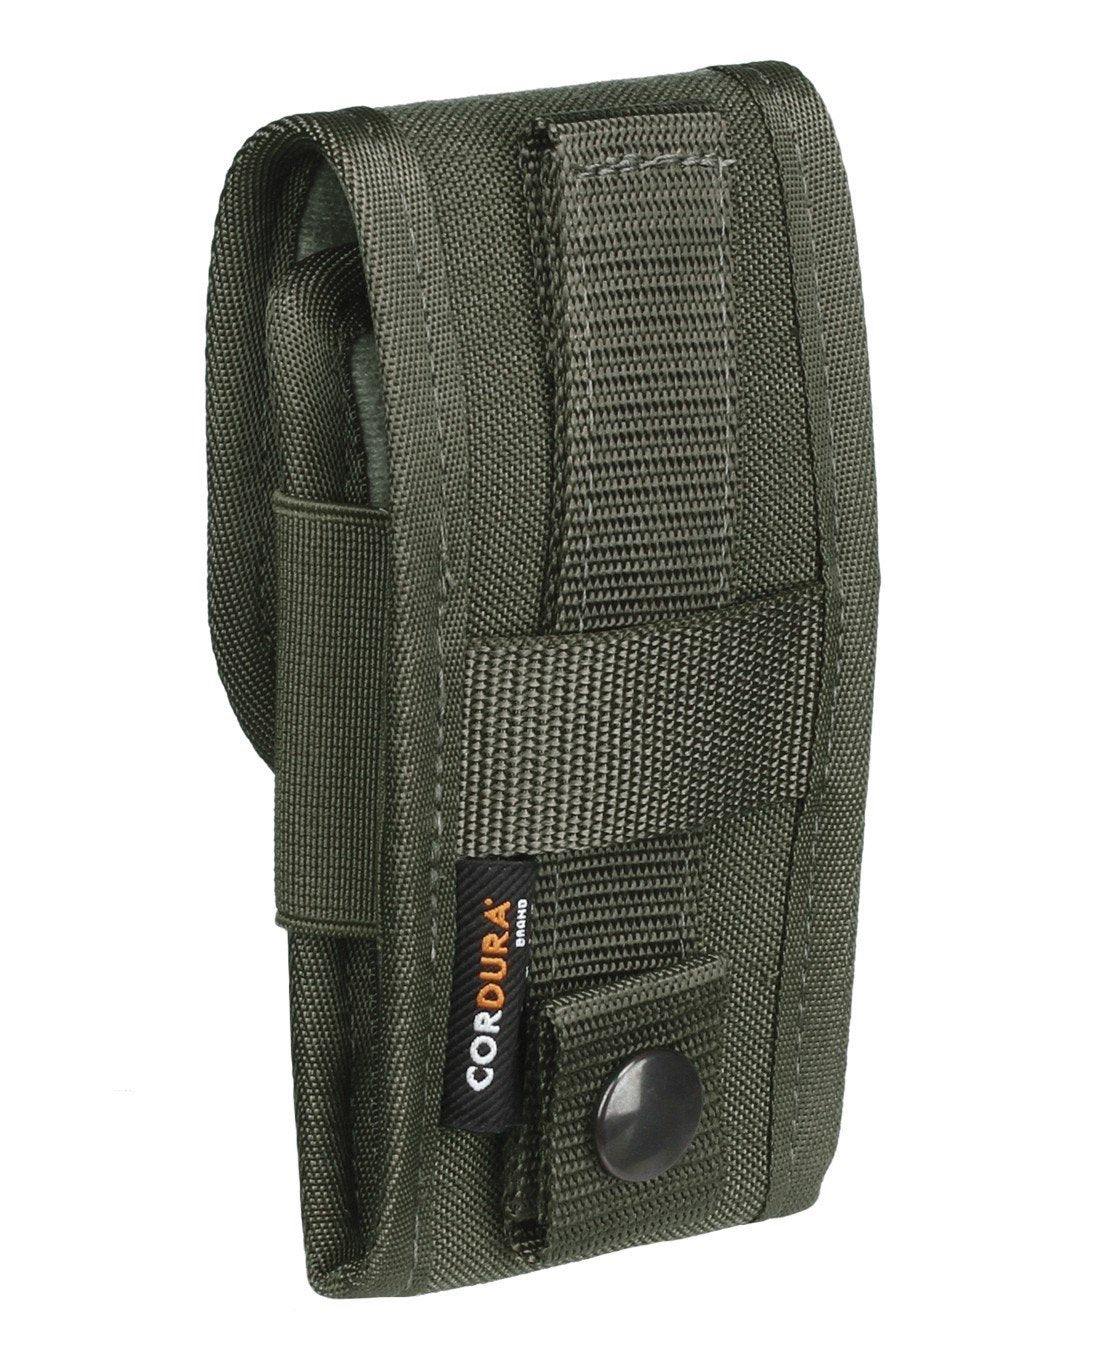 Tasmanian Tiger TAC Phone Cover Olive Accessories Tasmanian Tiger Tactical Gear Supplier Tactical Distributors Australia